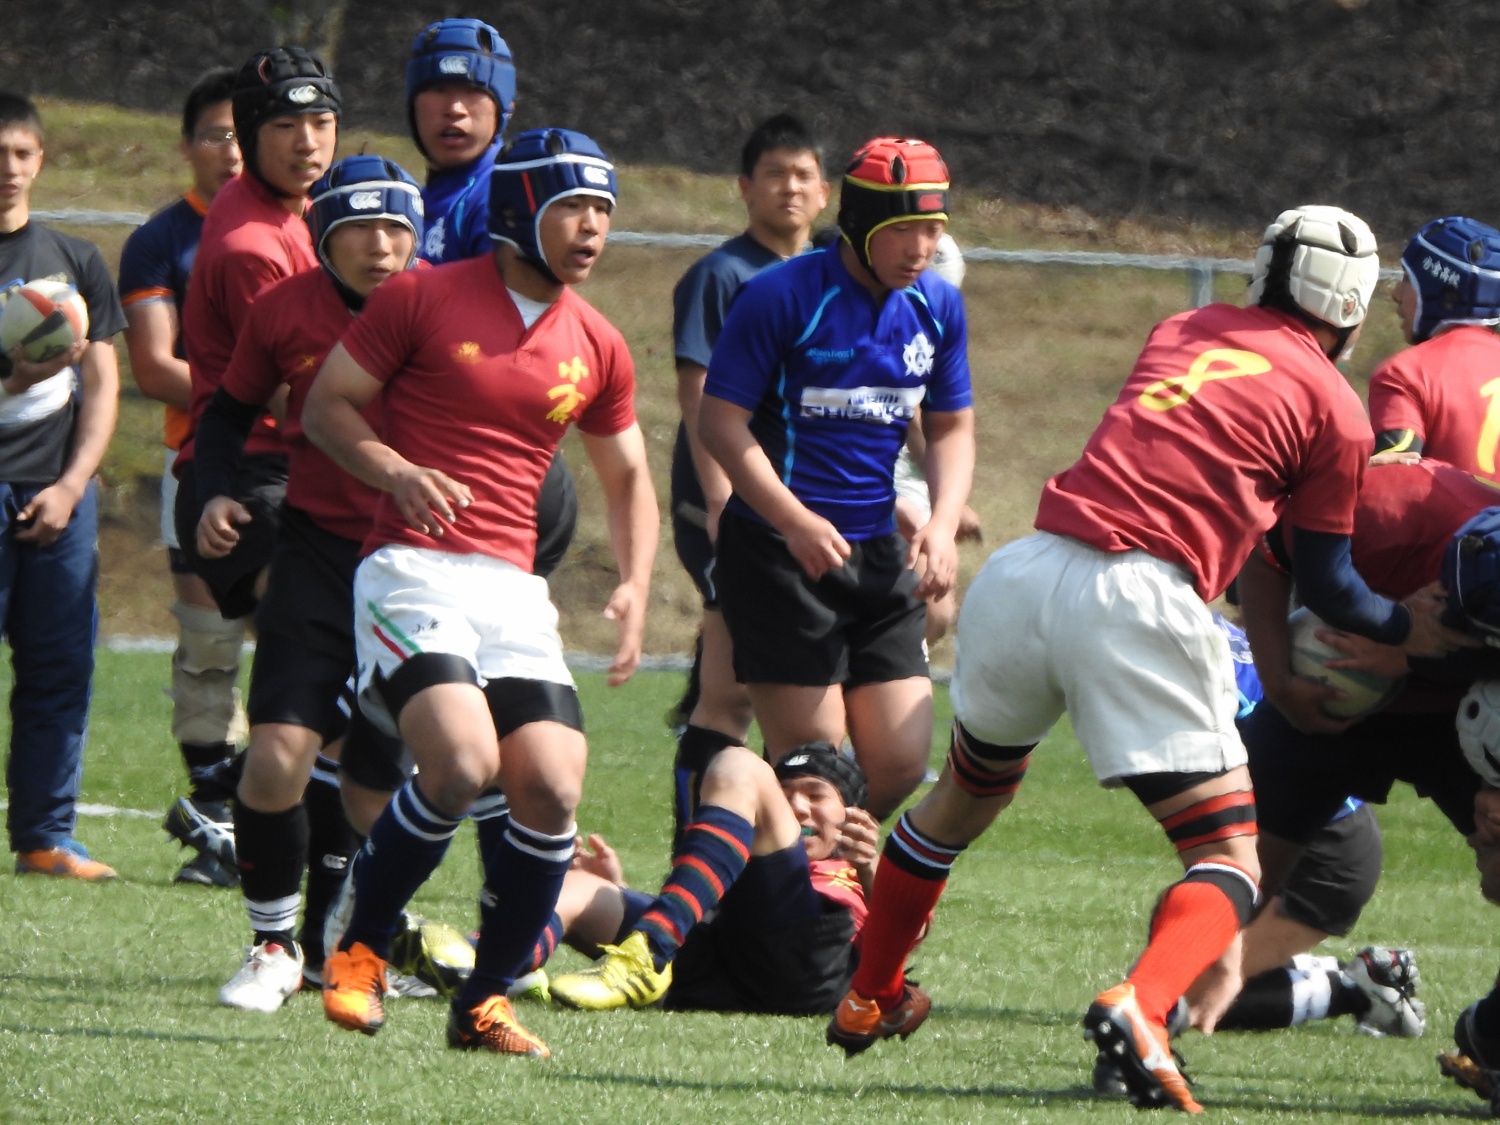 http://kokura-rugby.sakura.ne.jp/c0012_xlarge.jpg